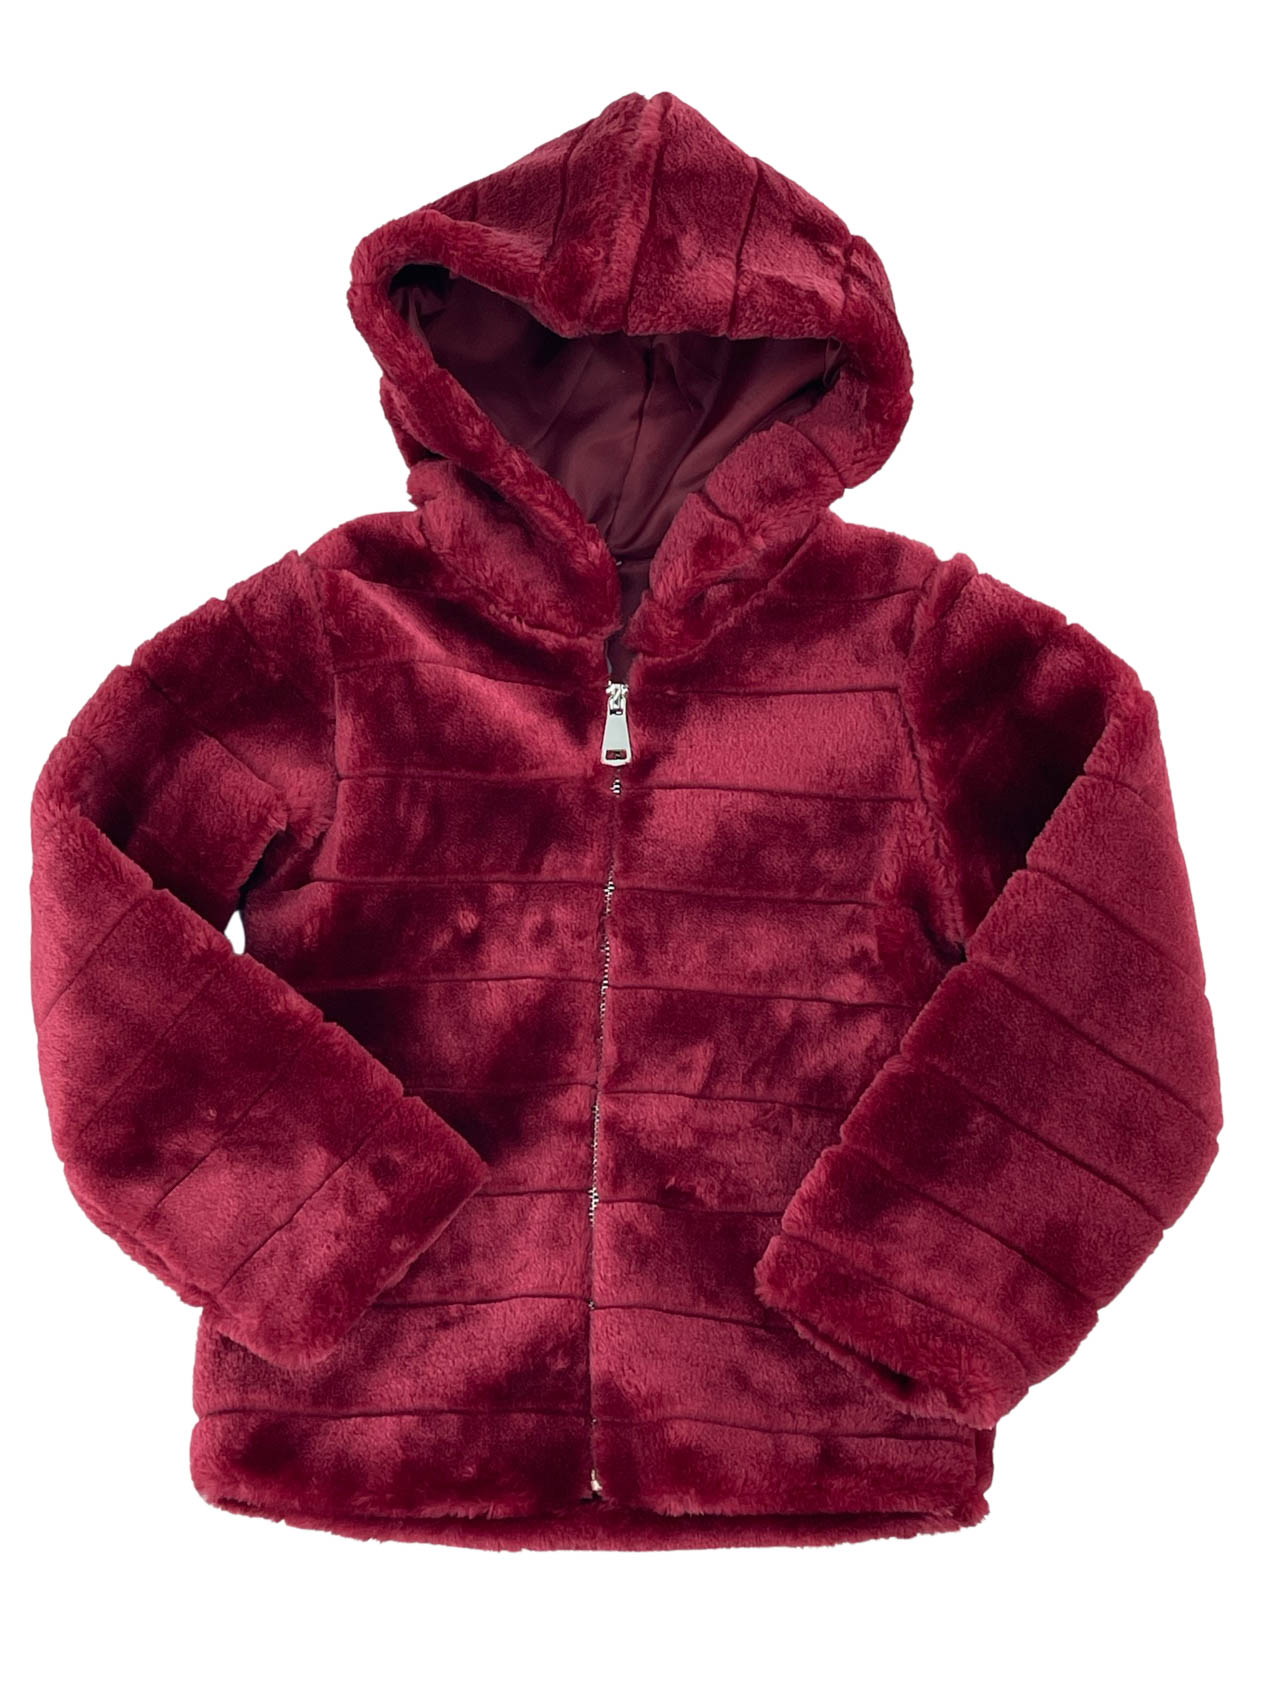 Fur jacket girl code 19274